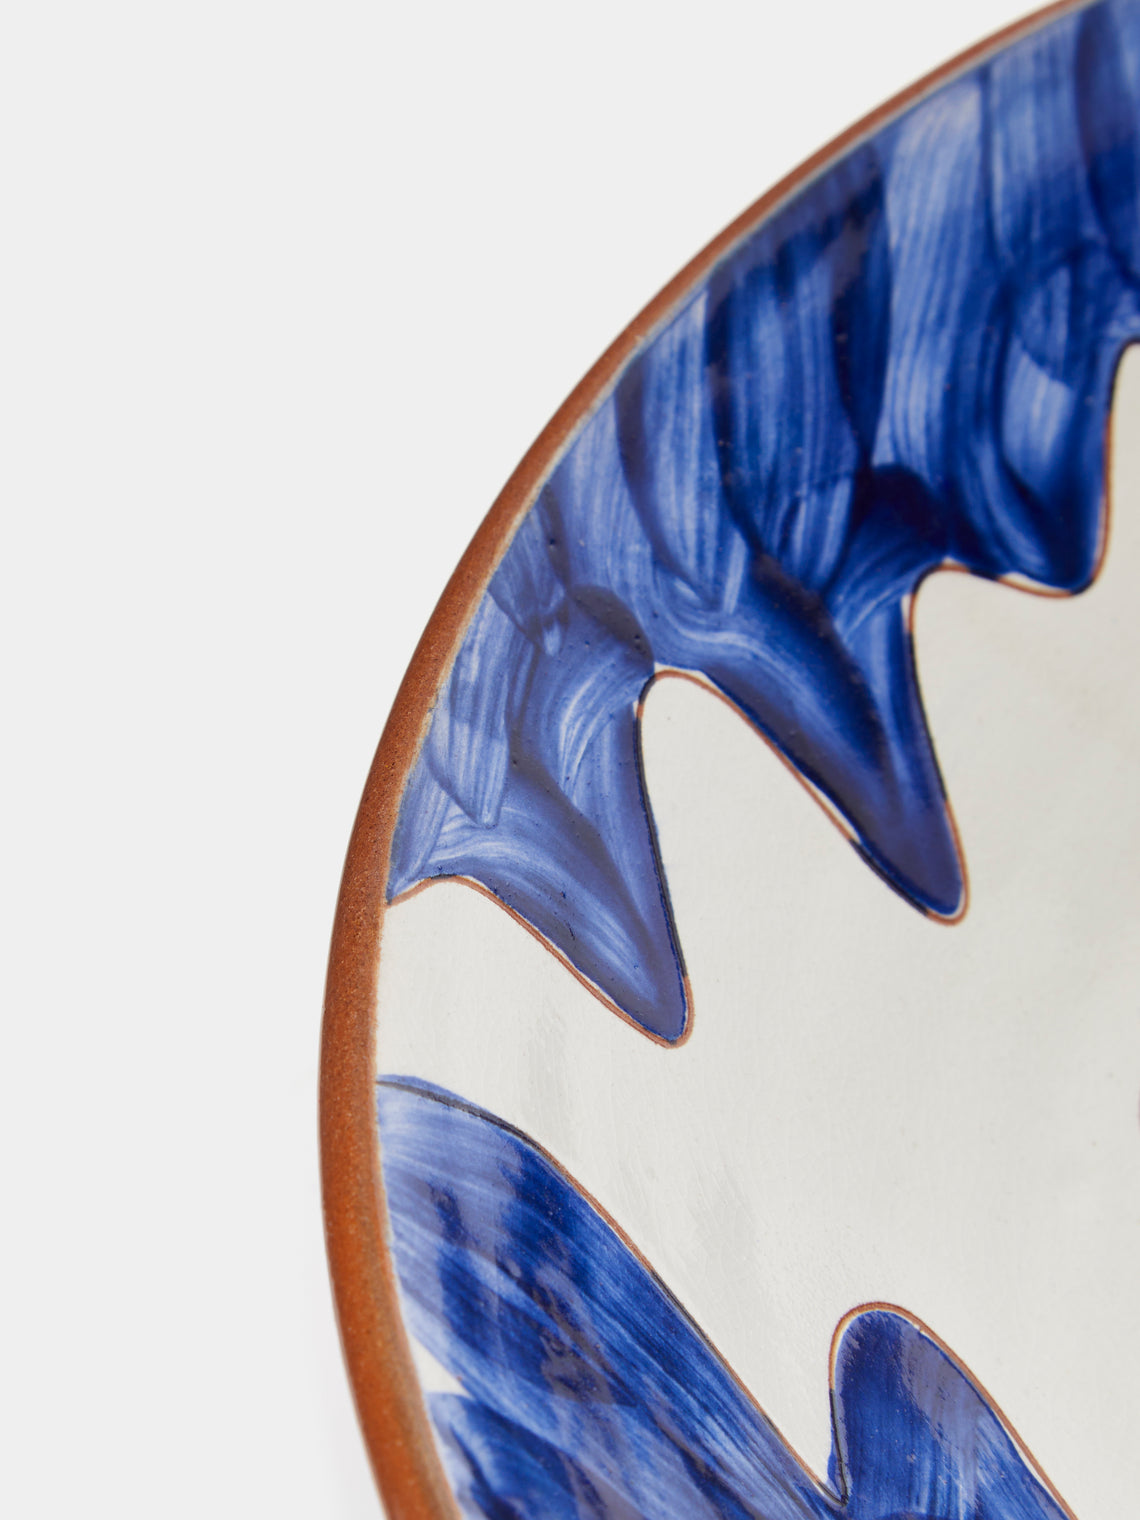 Malaika - Stencil Hand-Painted Ceramic Pasta Bowls (Set of 4) - Blue - ABASK